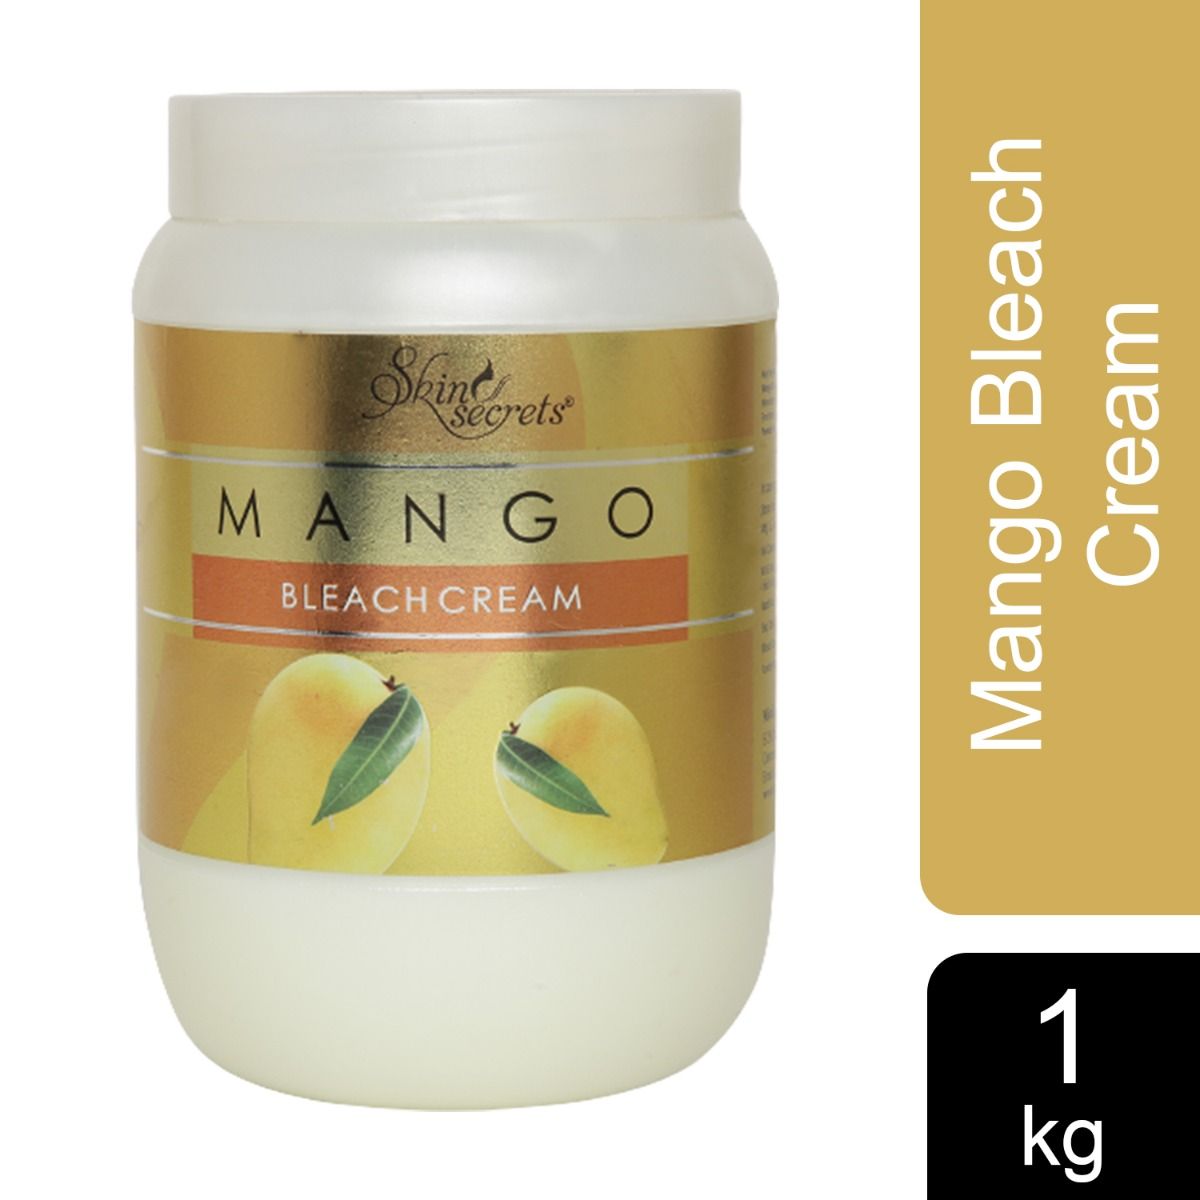 Skin Secrets Mango Bleach Cream